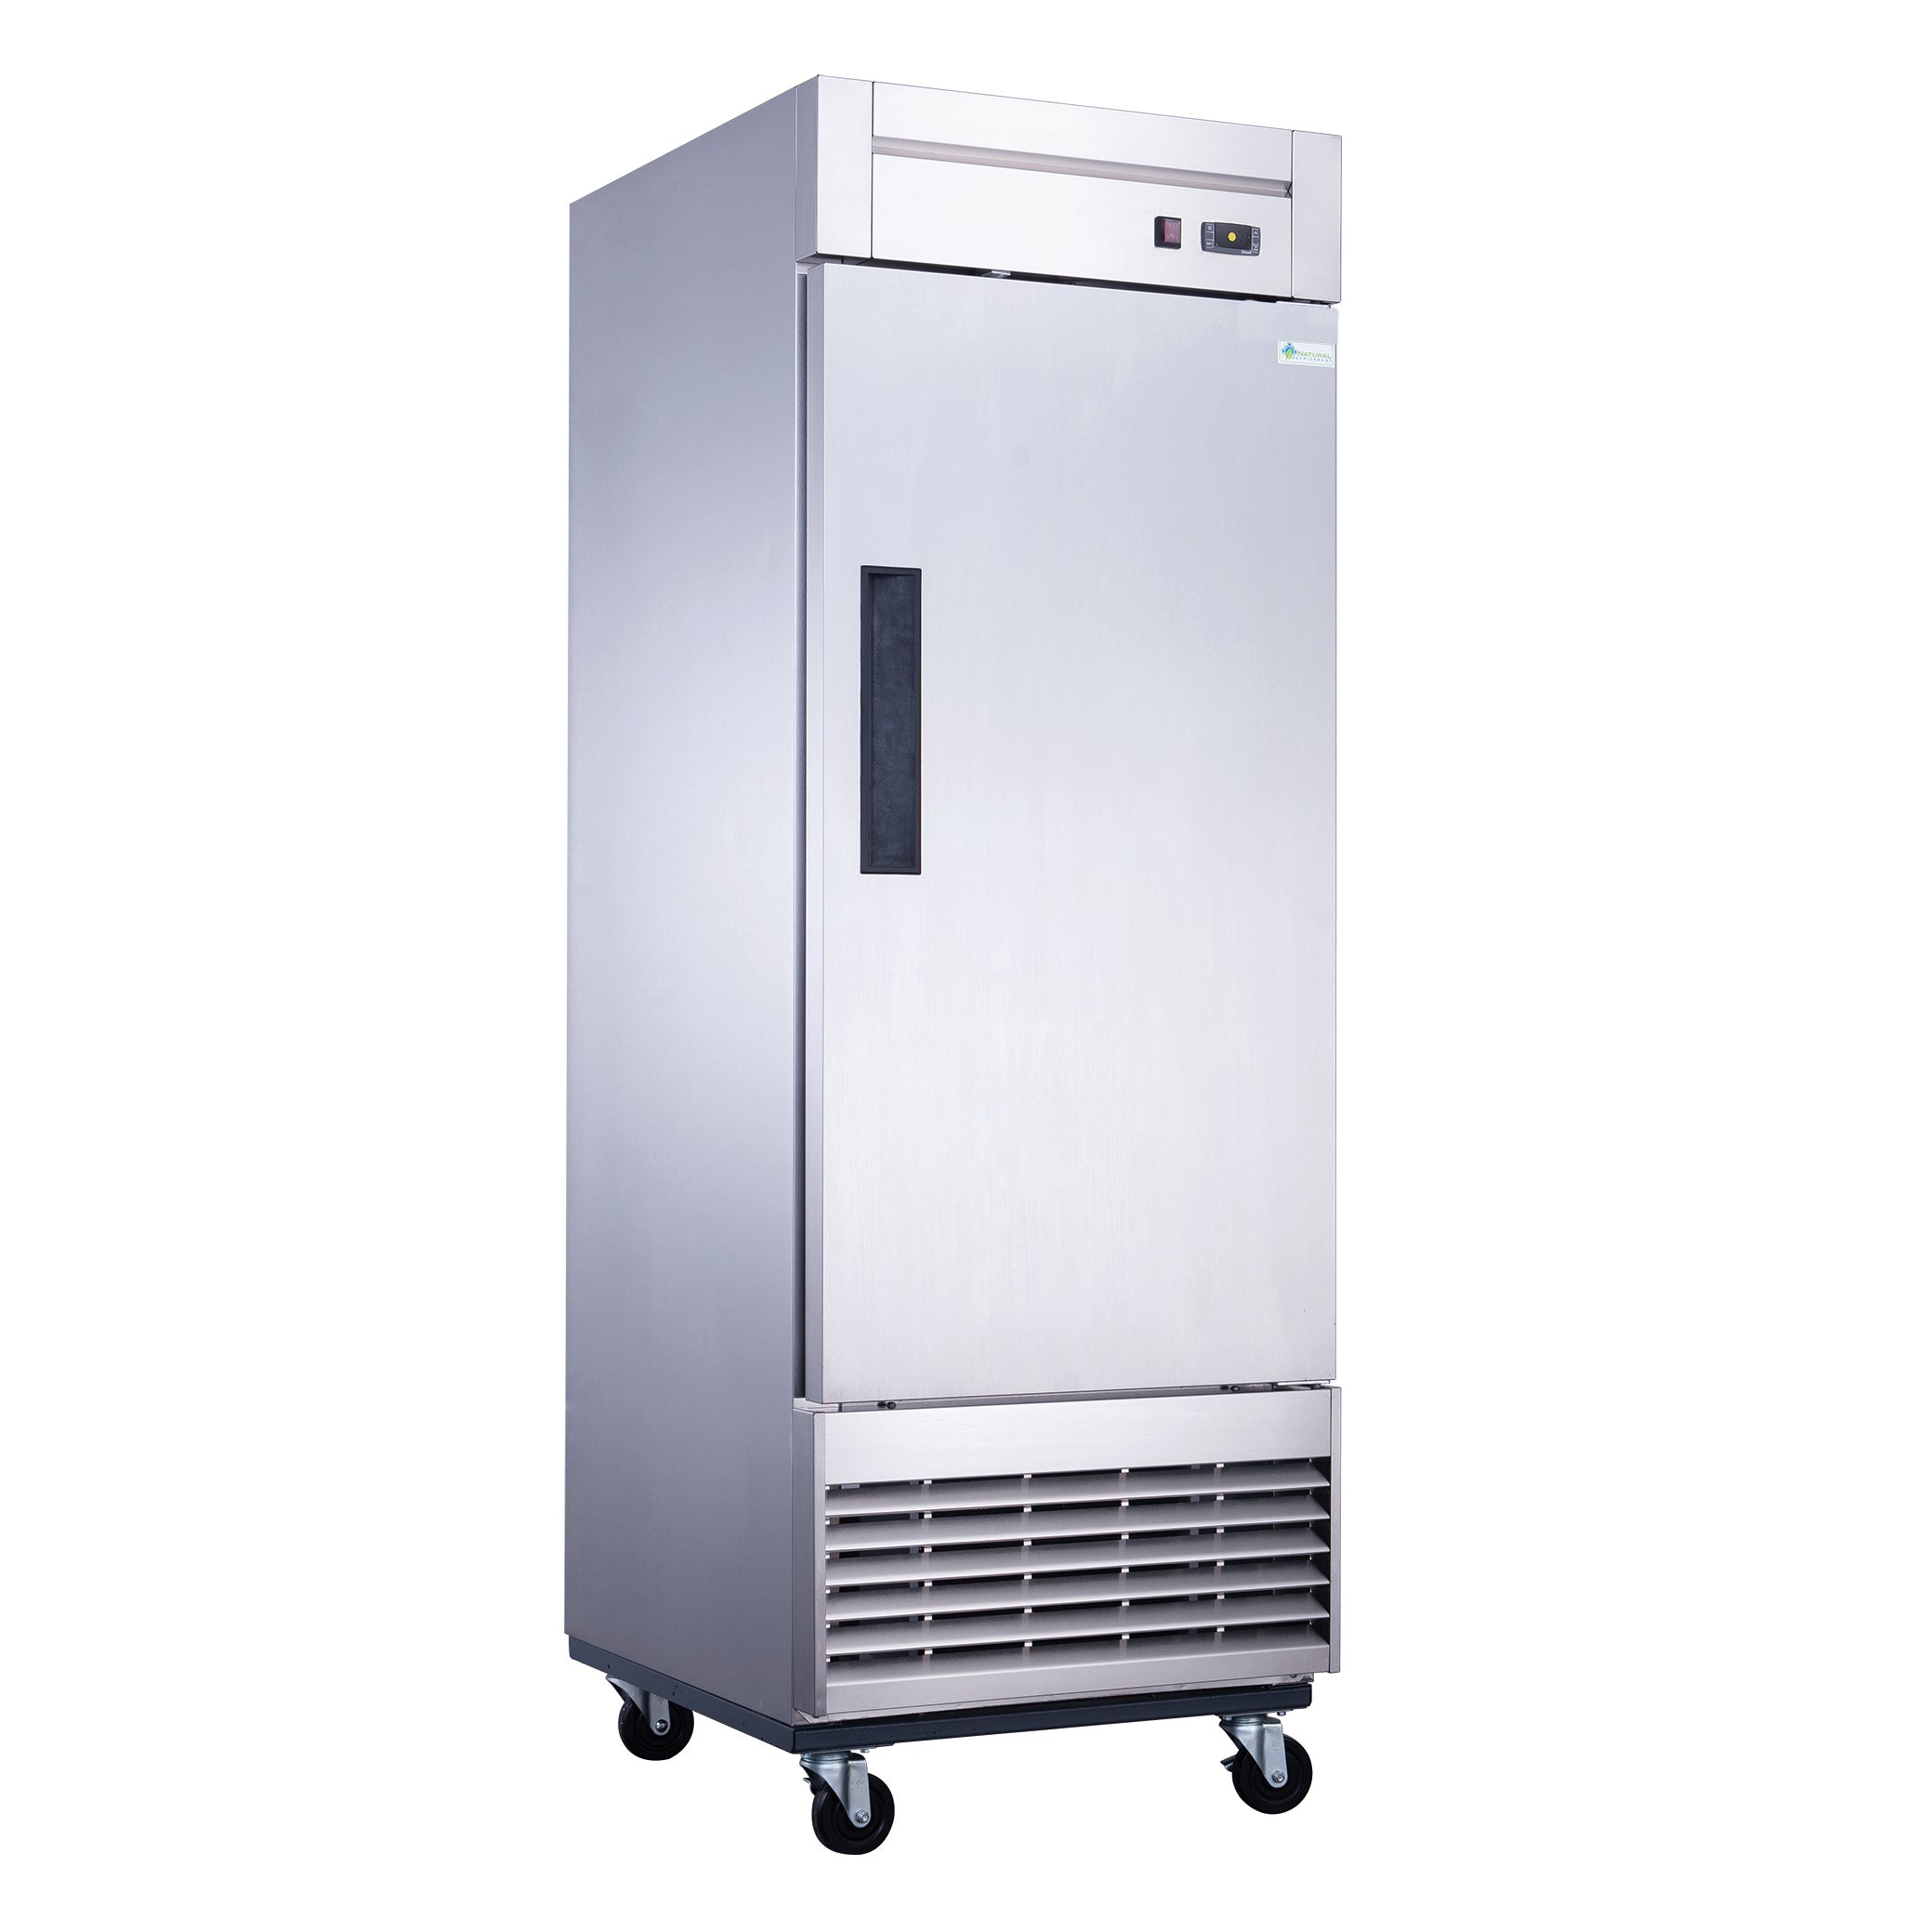 reach-in-refrigerators-reach-in-refrigerator-commercial-kitchen-equipment